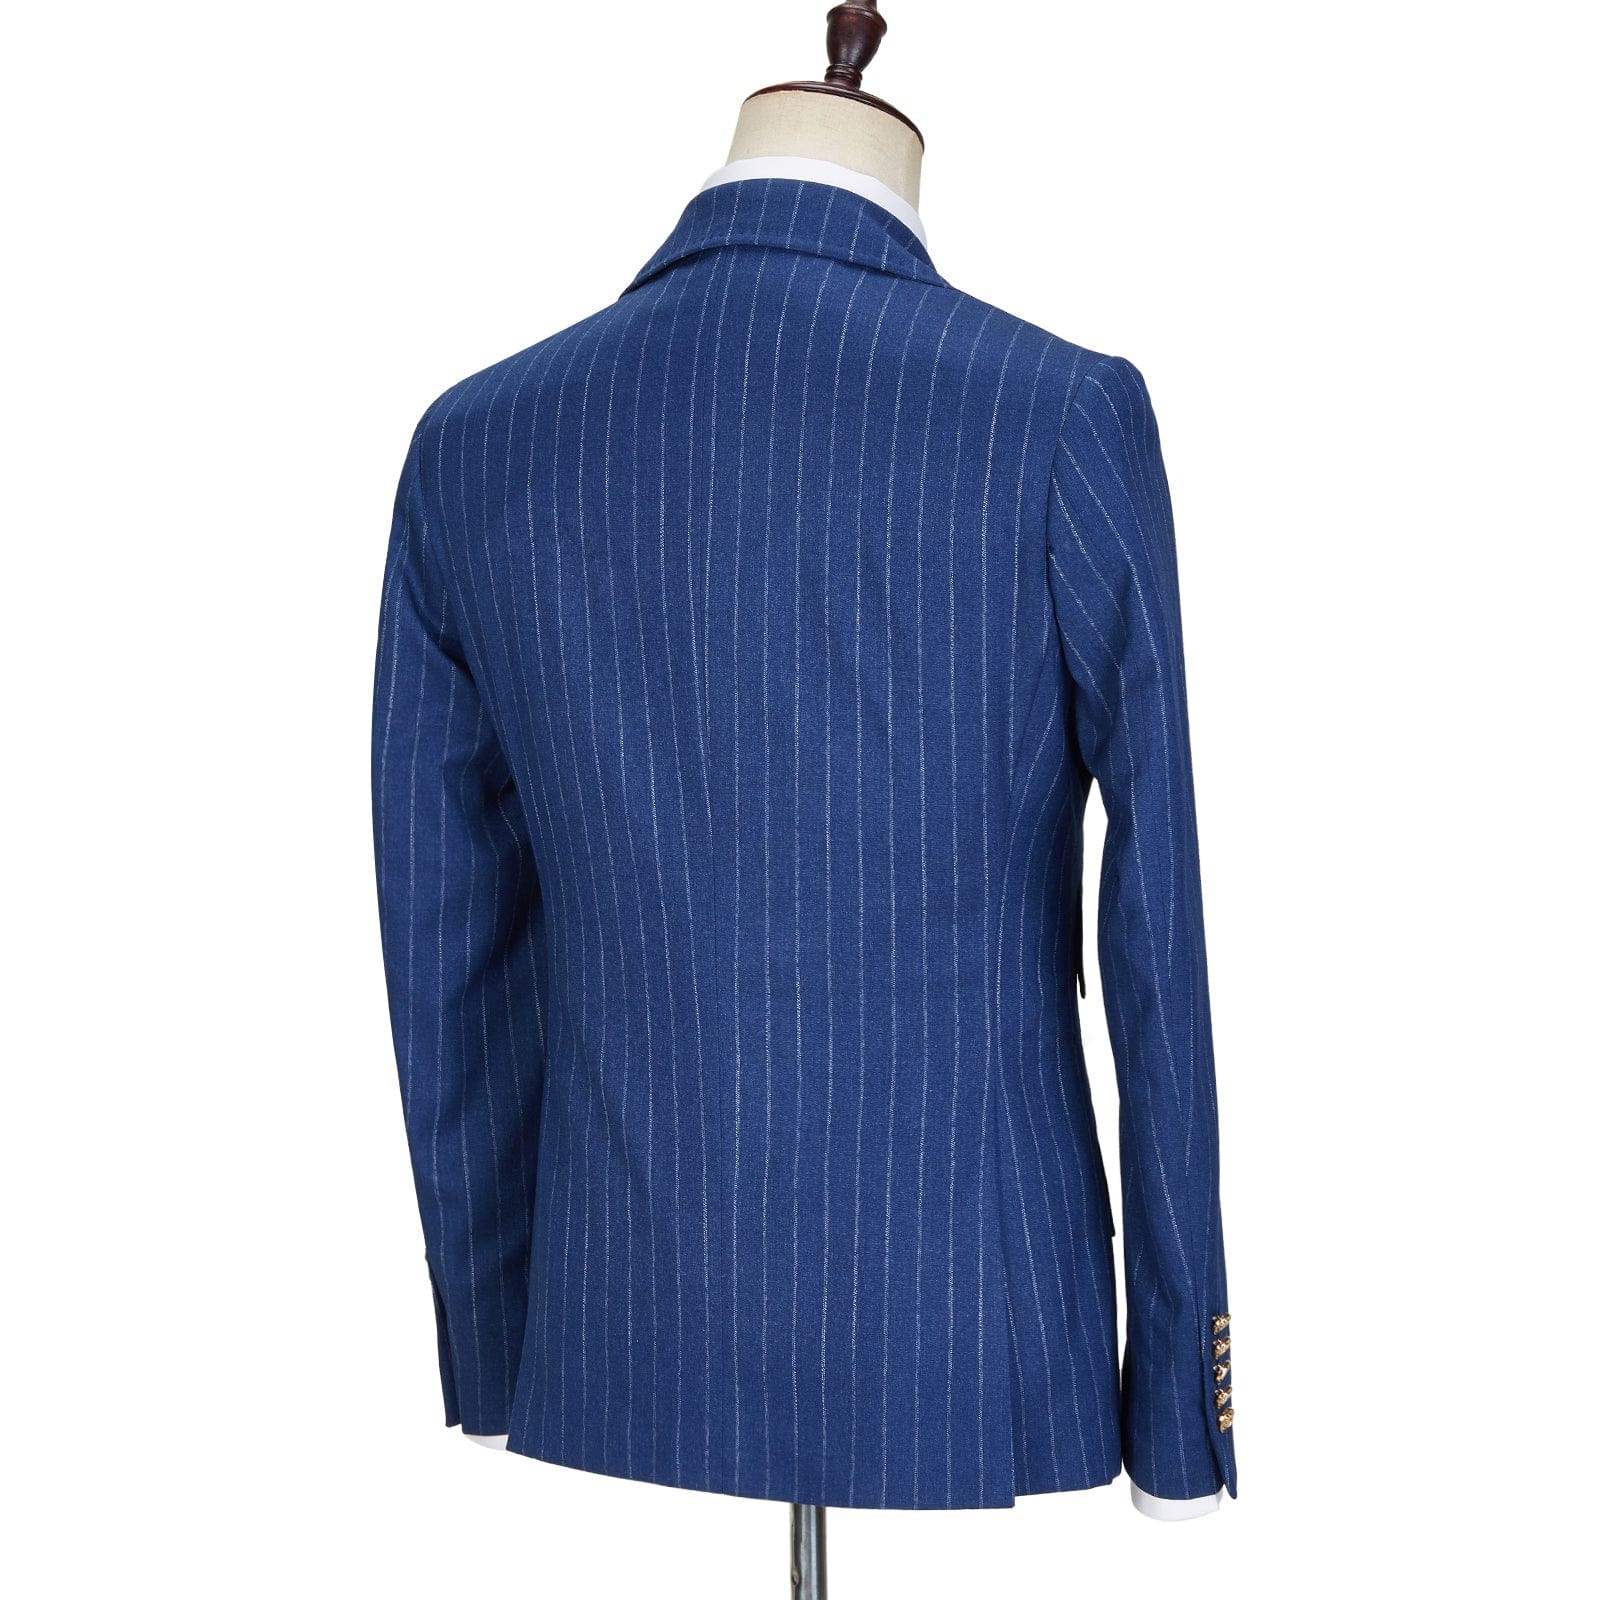 ceehuteey Formal Bussiness Striped 3 Pieces Mens Peak Lapel Suit Tuxedos (Blazer+Pants)